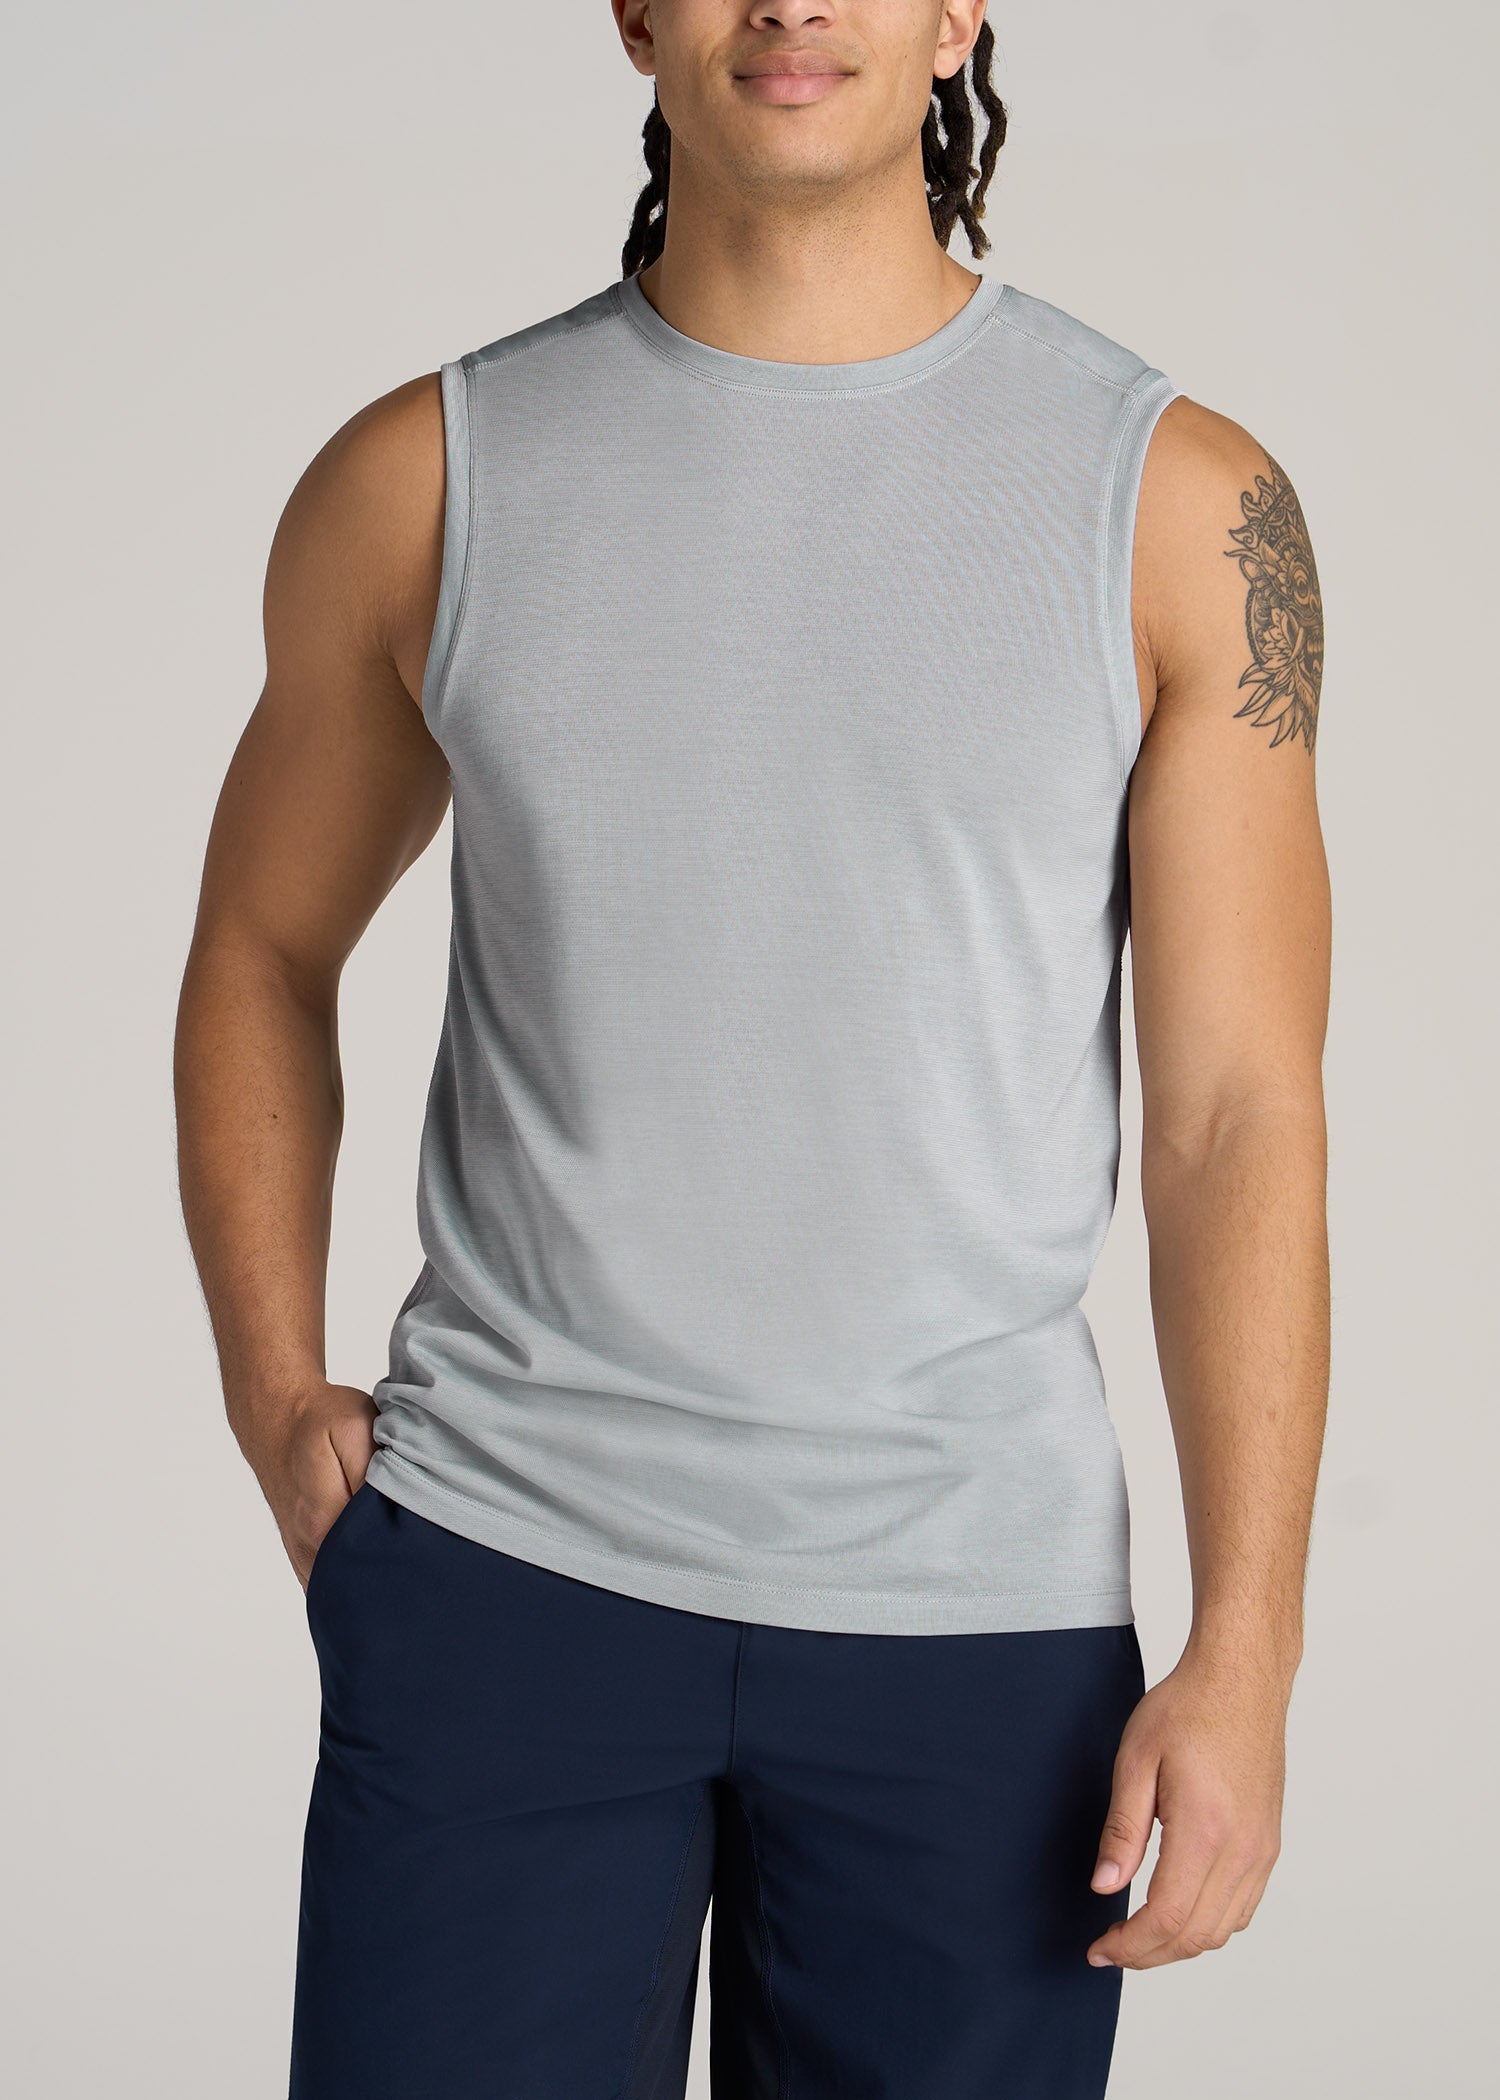 Mens Tek Gear Dry Tek Gray Muscle Tank Top Shirt Size Large